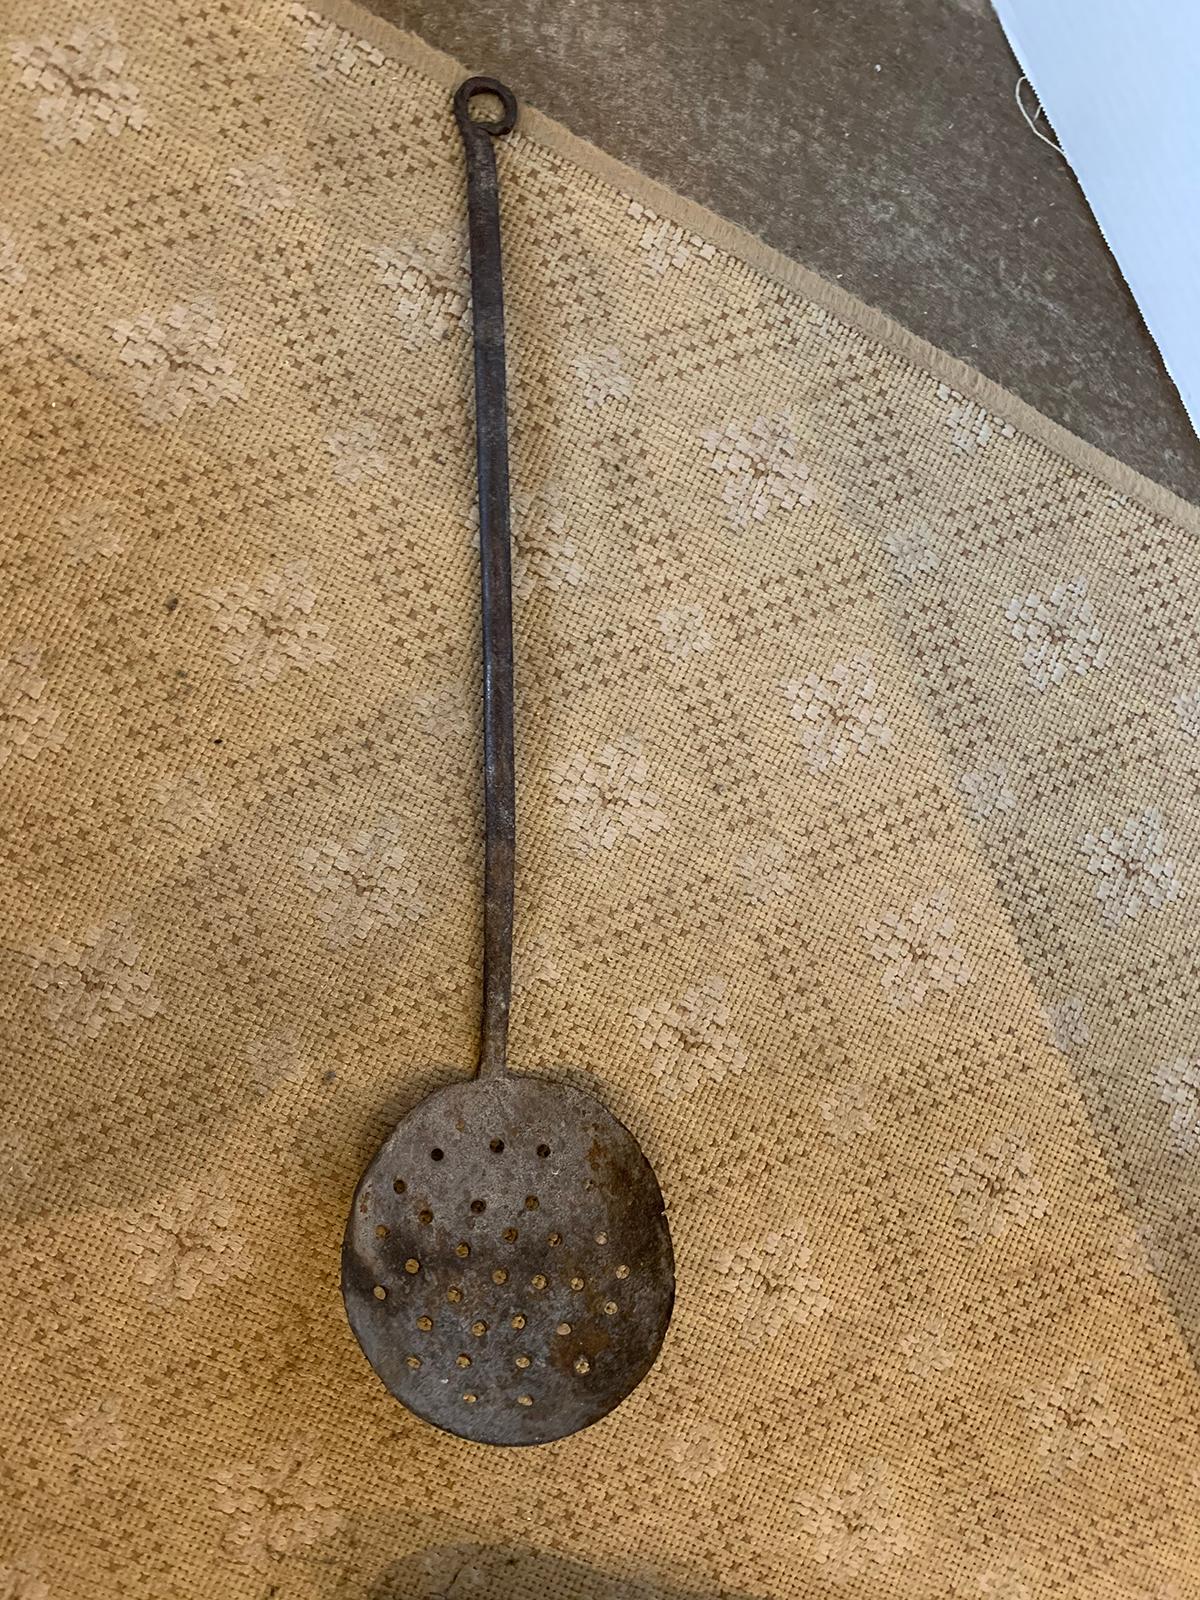 18th-19th century iron tea strainer spoon.